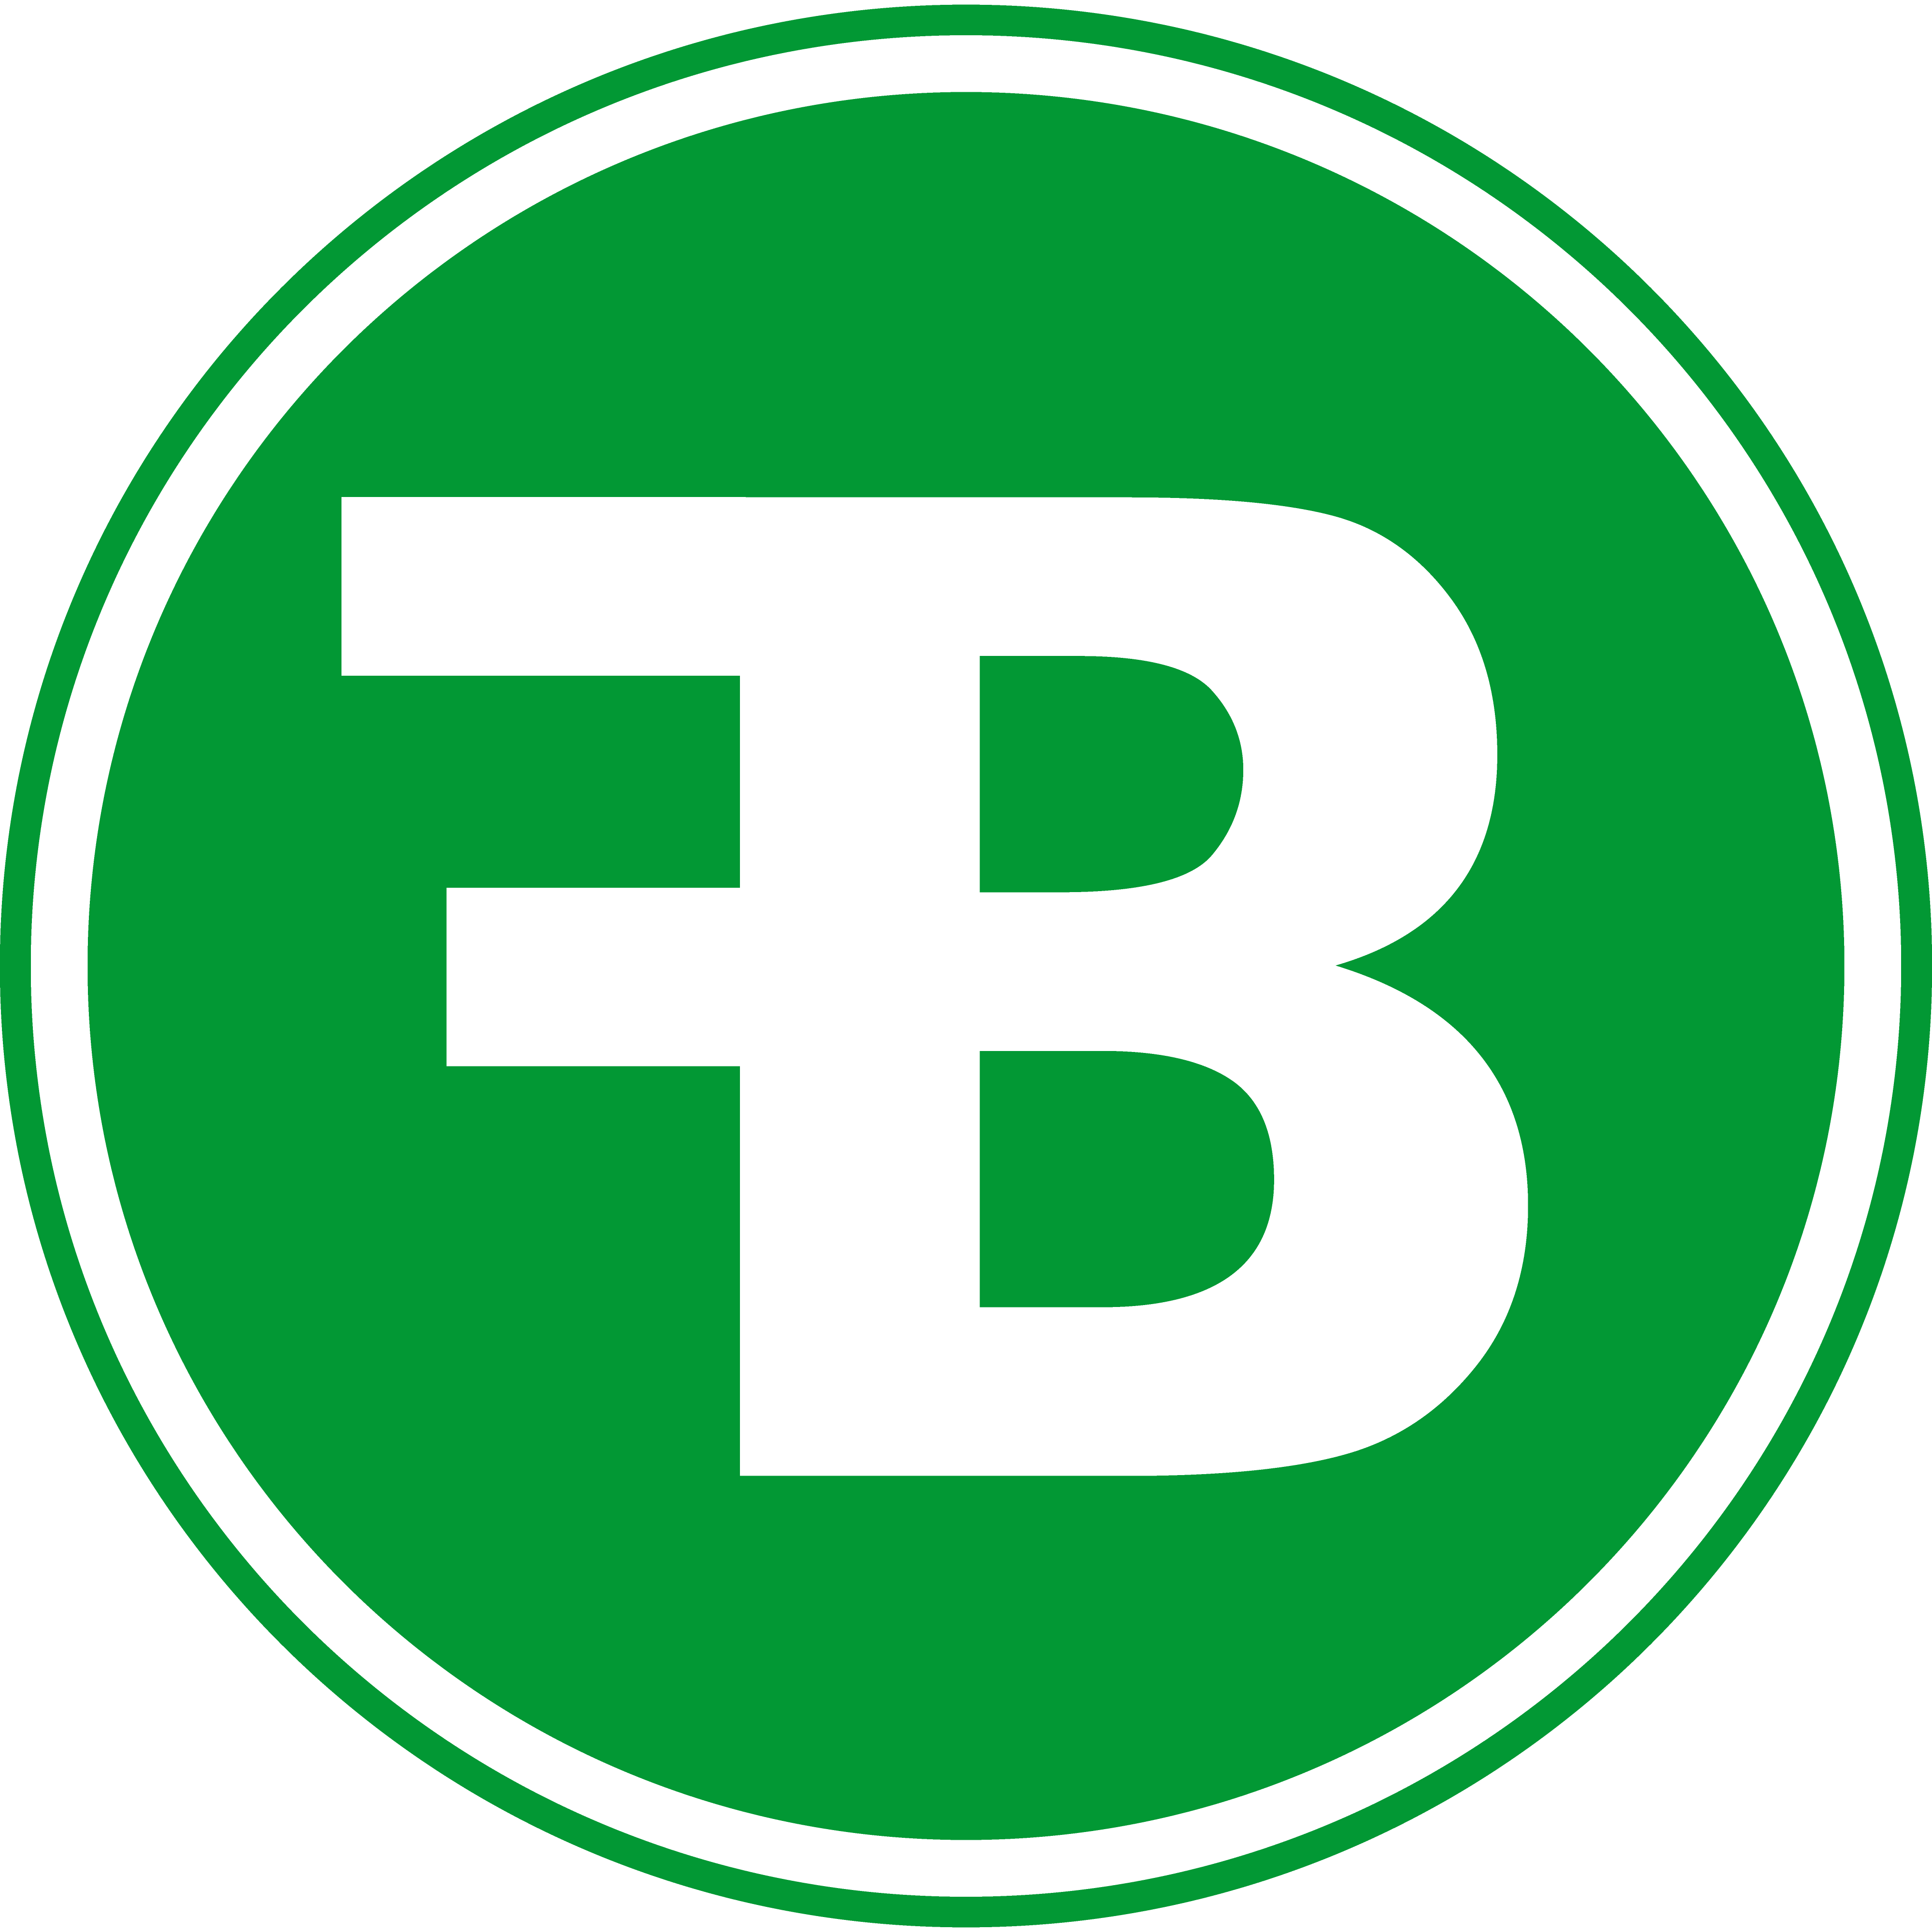 Bf Co logo 4k